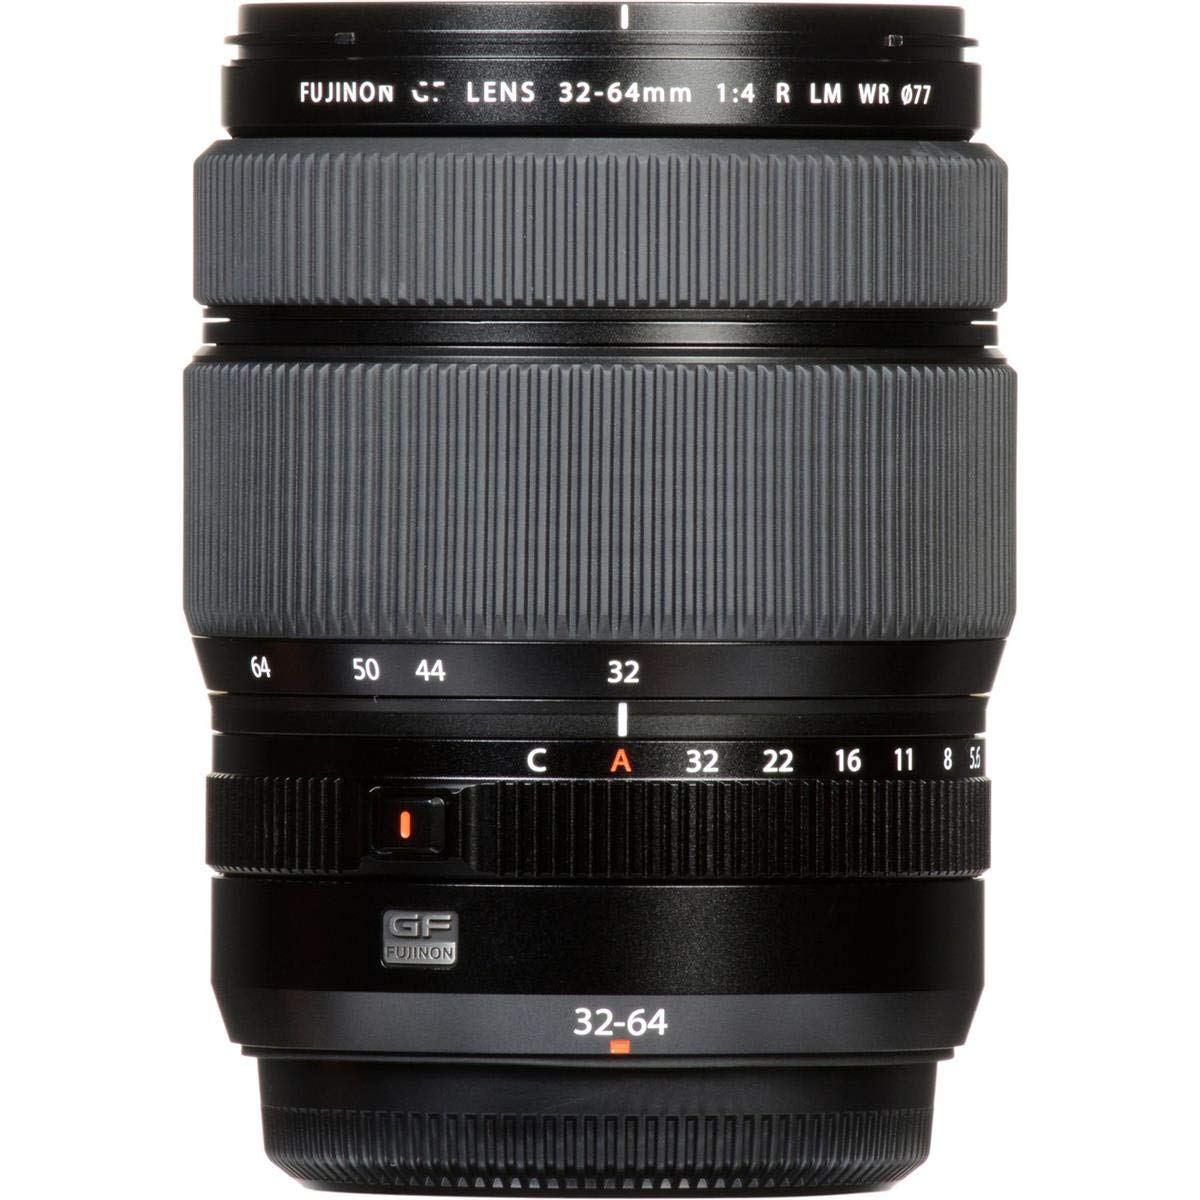 Fujifilm GFX50S II Medium Format Camera Body with GF 32-64mm f/4 R LM WR Wide-Angle Zoom Lens